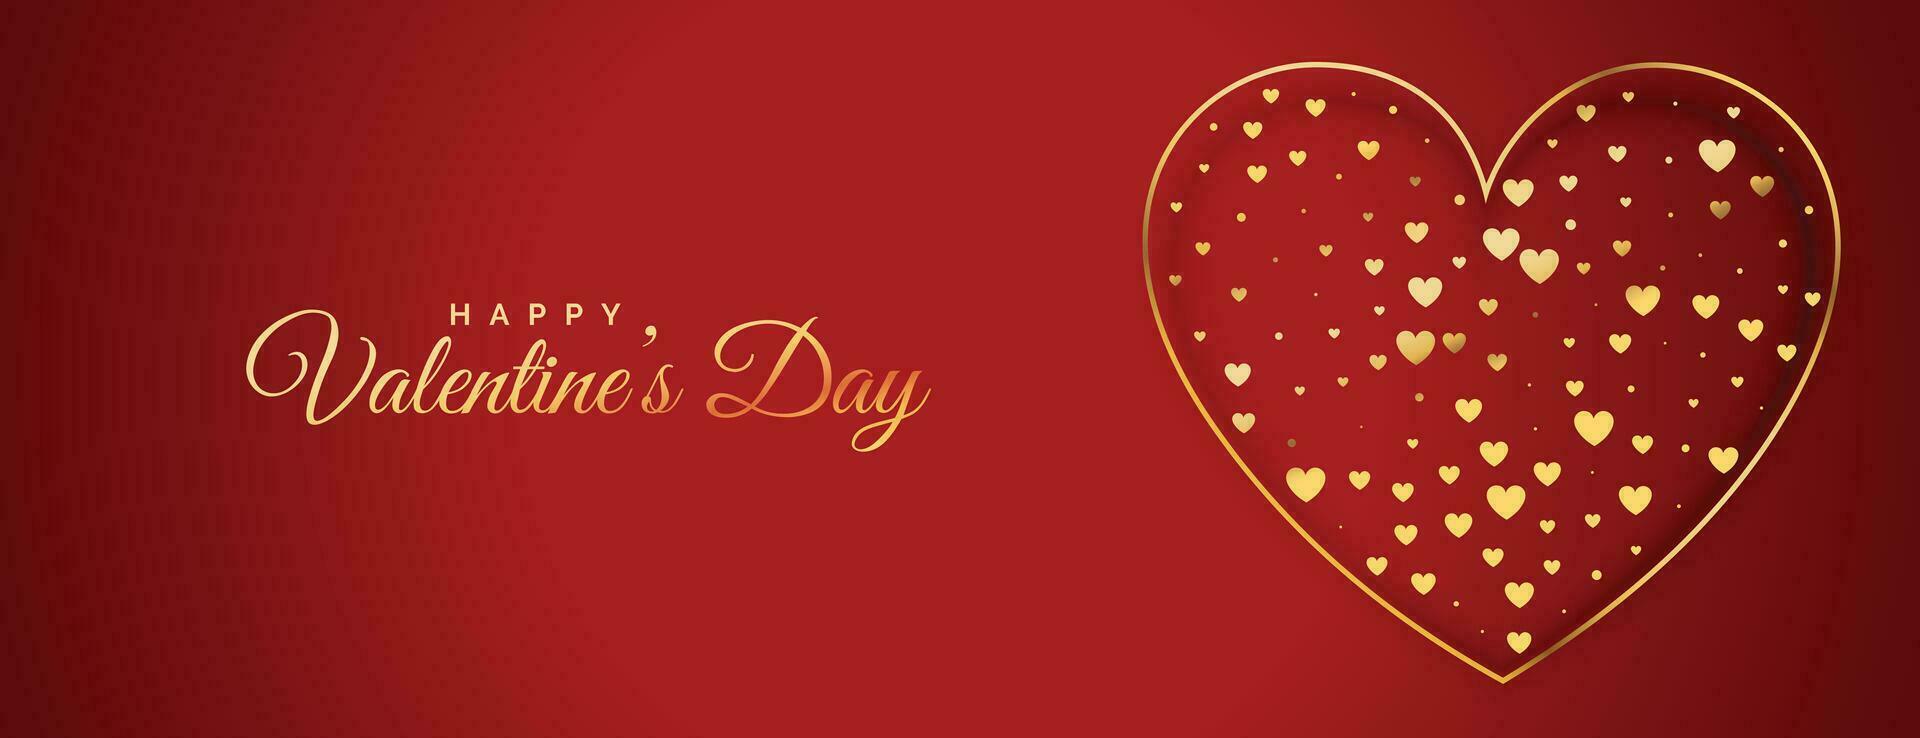 valentines day golden heart decorative banner vector